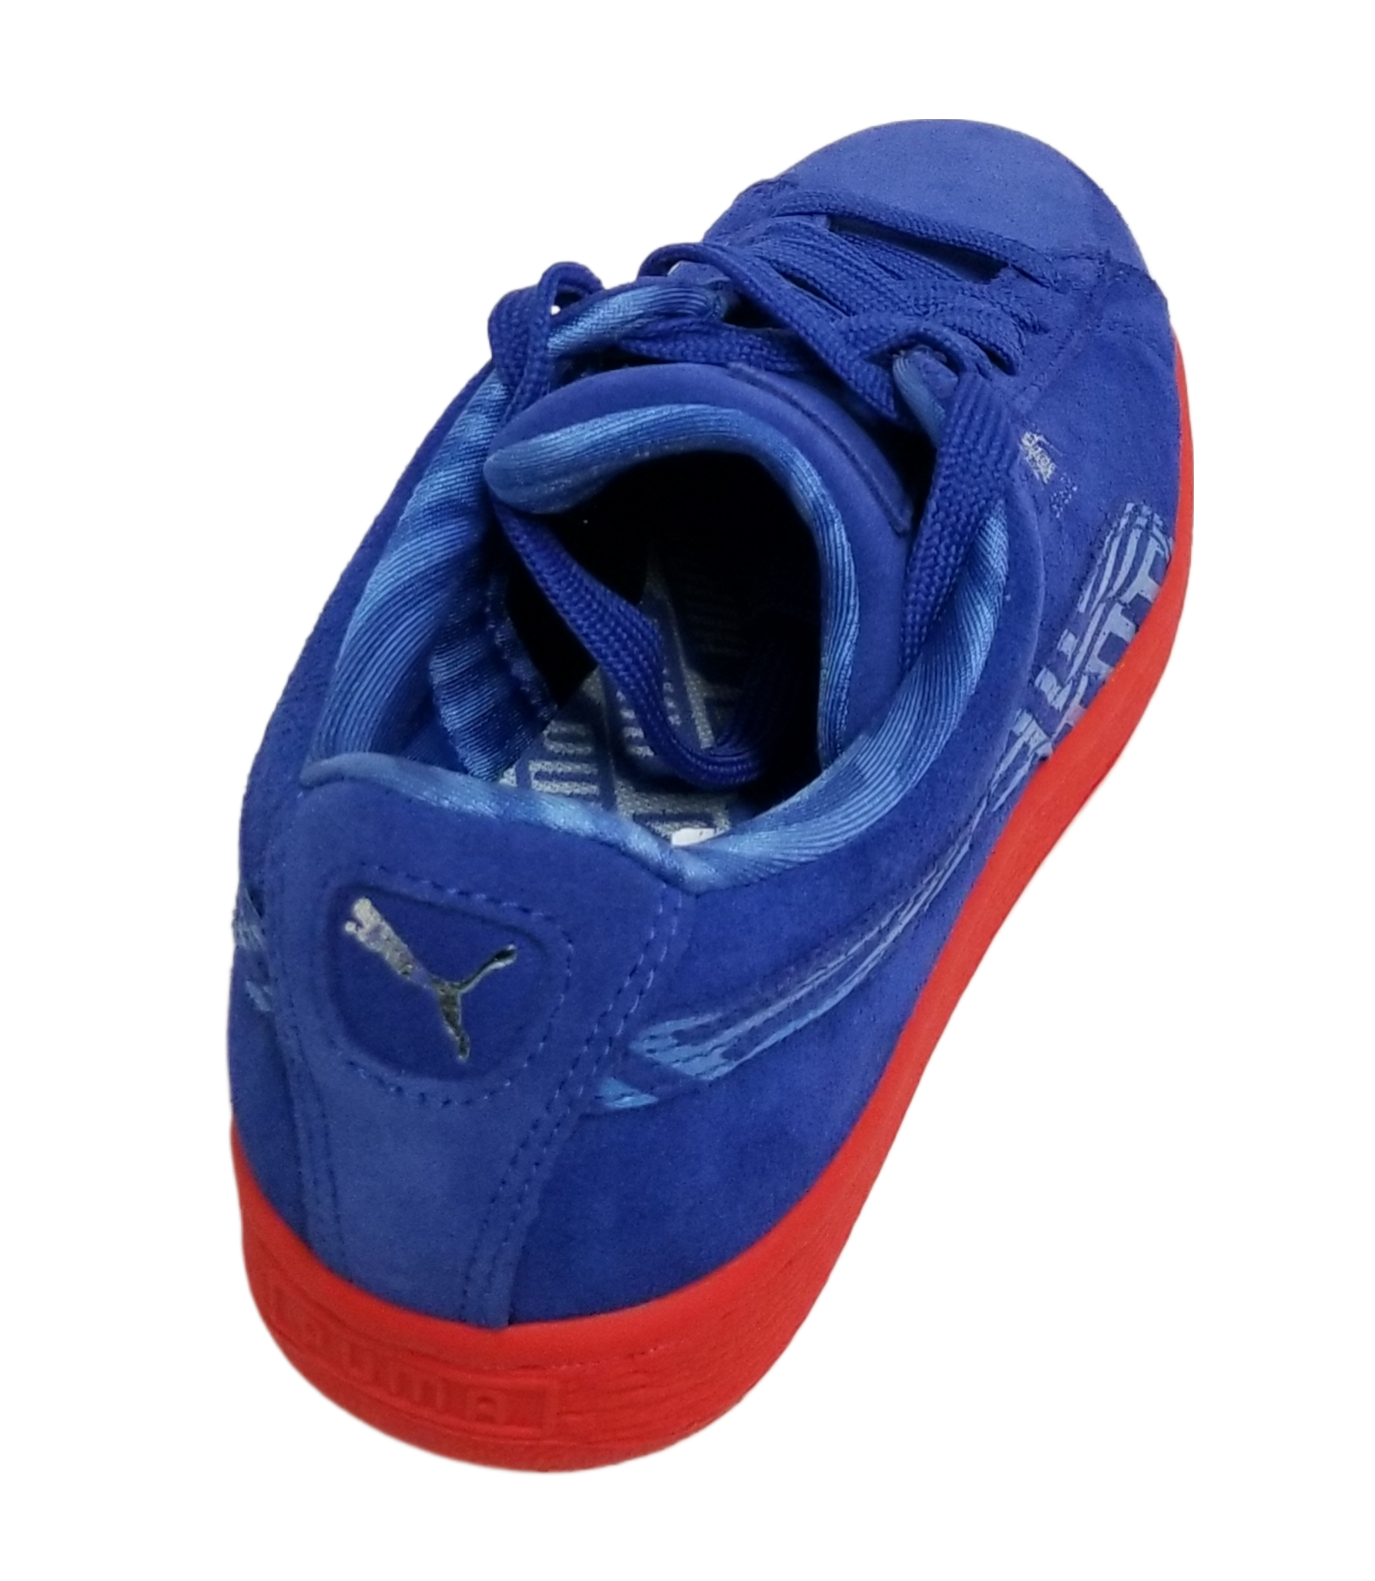 Puma Women Suede Classic + Colored Shoes Dazzling-Marina Blue-Grenadn 360249-03